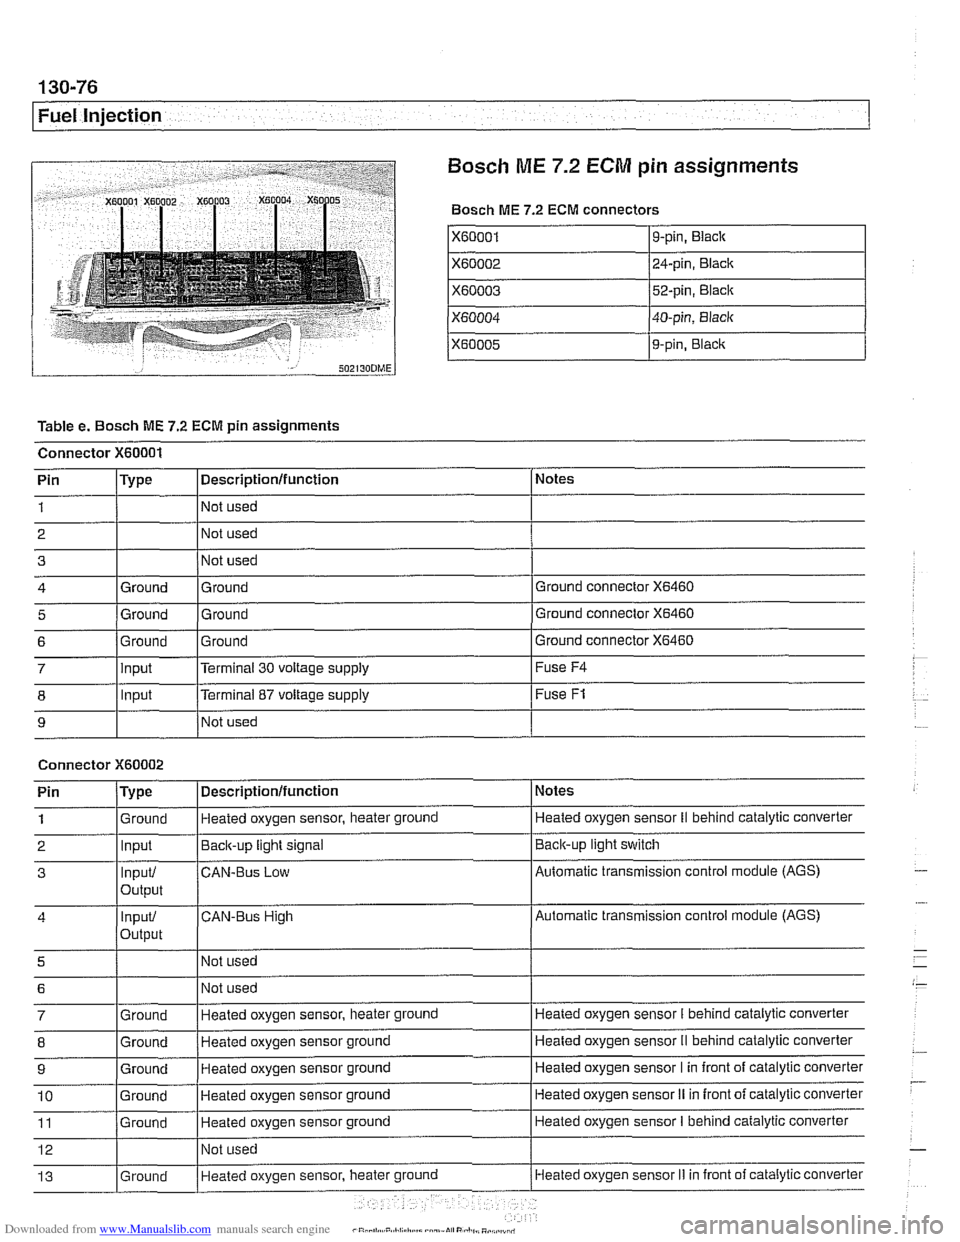 BMW 528i 2000 E39 Service Manual Downloaded from www.Manualslib.com manuals search engine 
130-76 
Fuel Injection 
Bosch 
ME 7.2 ECM pin assignments 
Bosch ME 7.2 ECM connectors 
X60001 
X60002 
X60003 
X60004 
X60005 
Table  e. Bosc